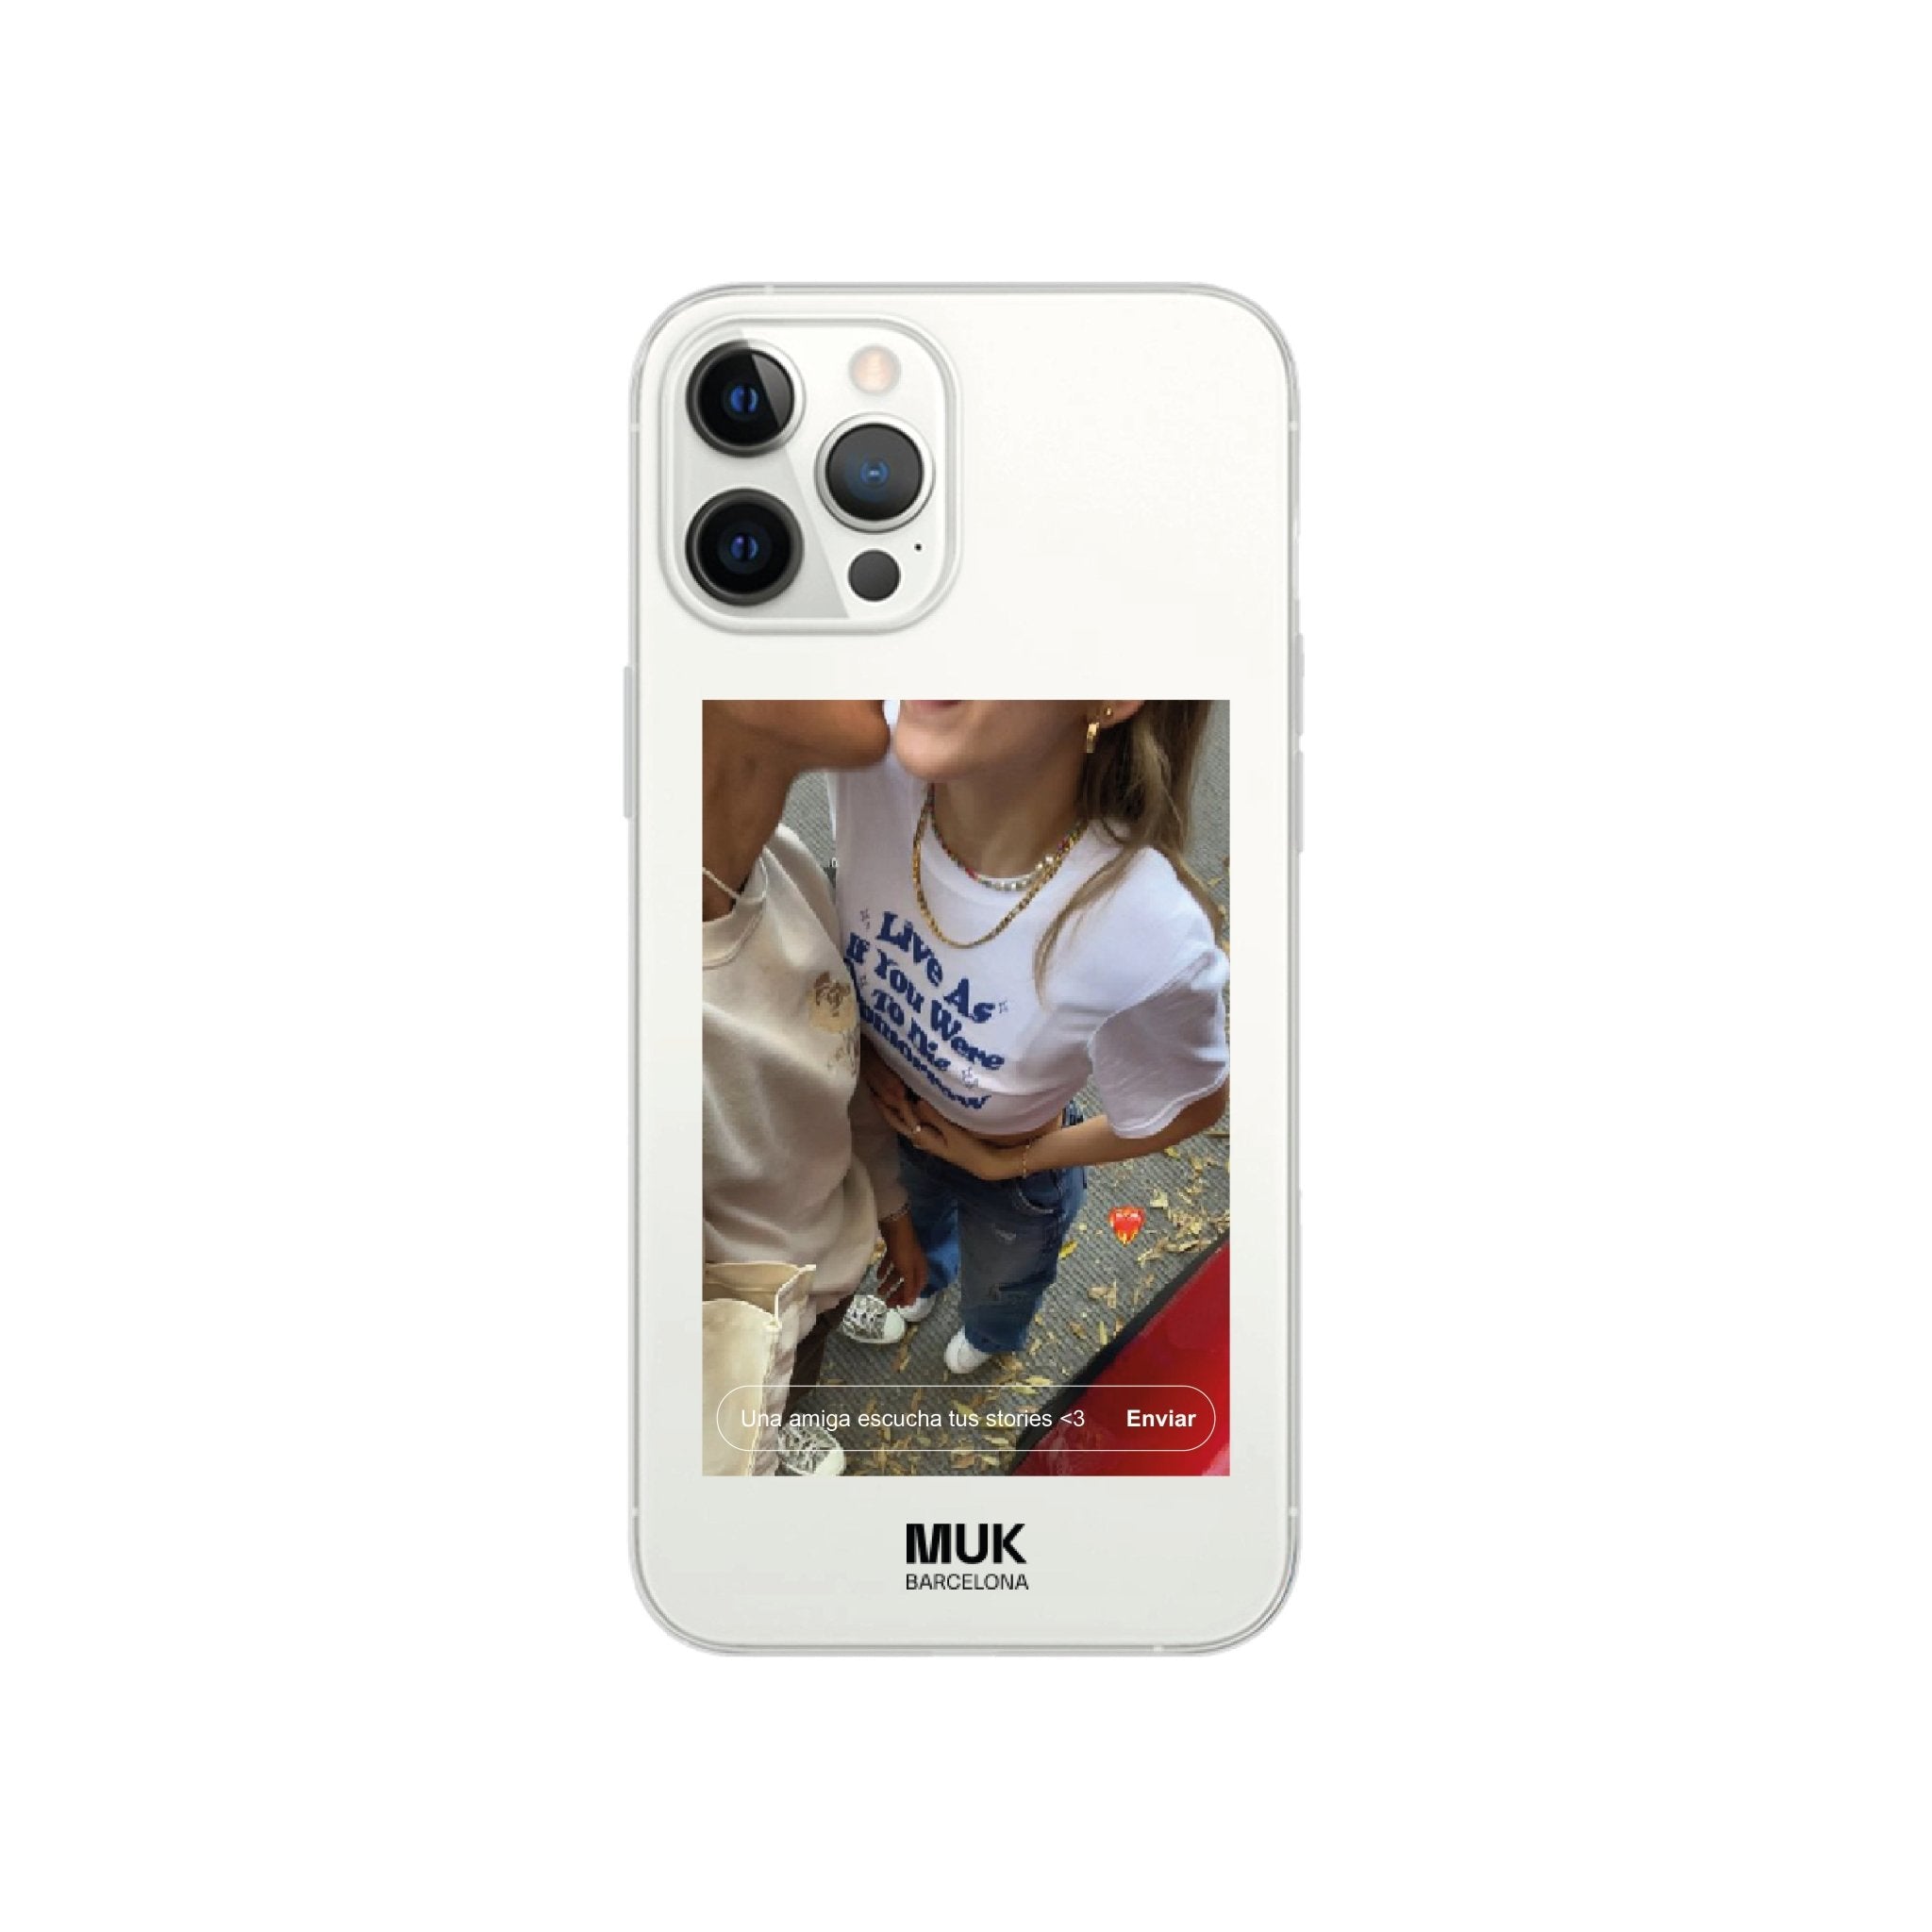 Phone Case transparente con foto personalizable estilo stories/historia de Instagram.
